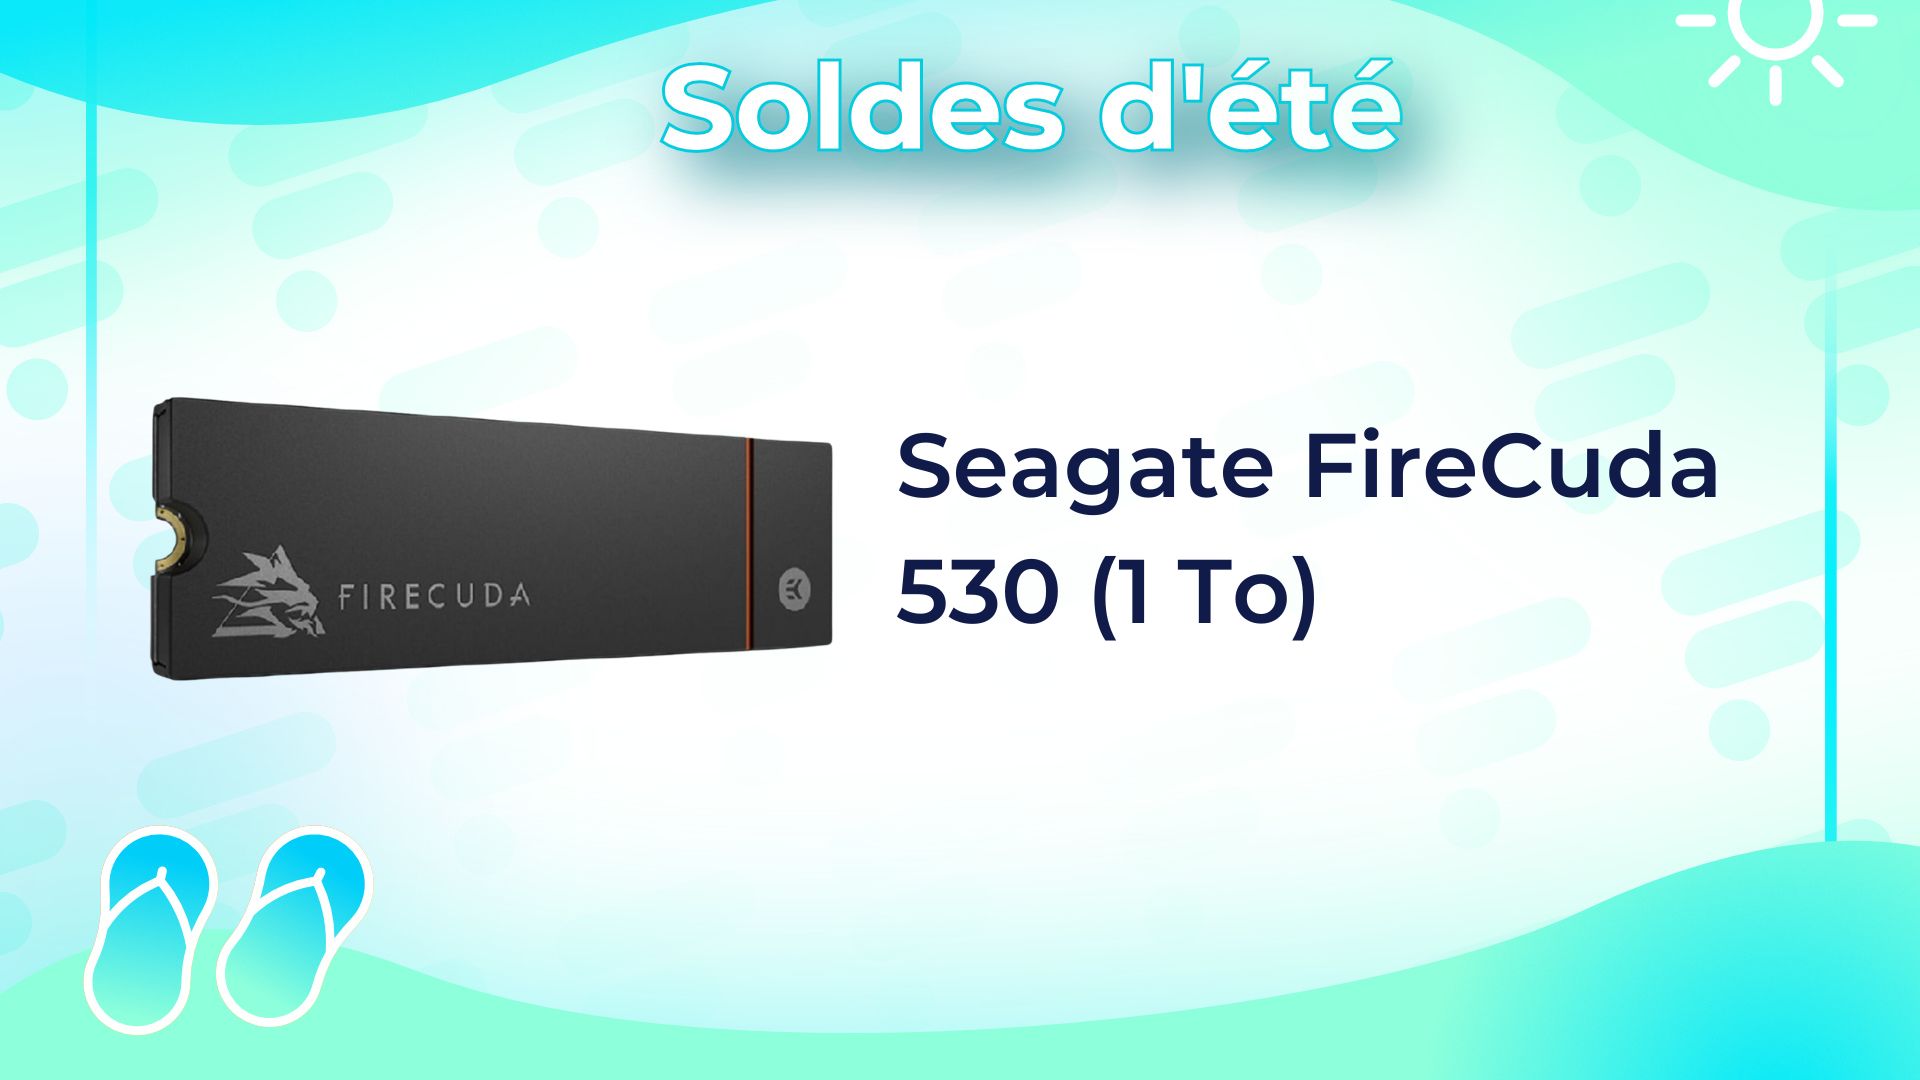 Excellent prix pour ce SSD Firecuda 1 To compatible PS5 - Numerama